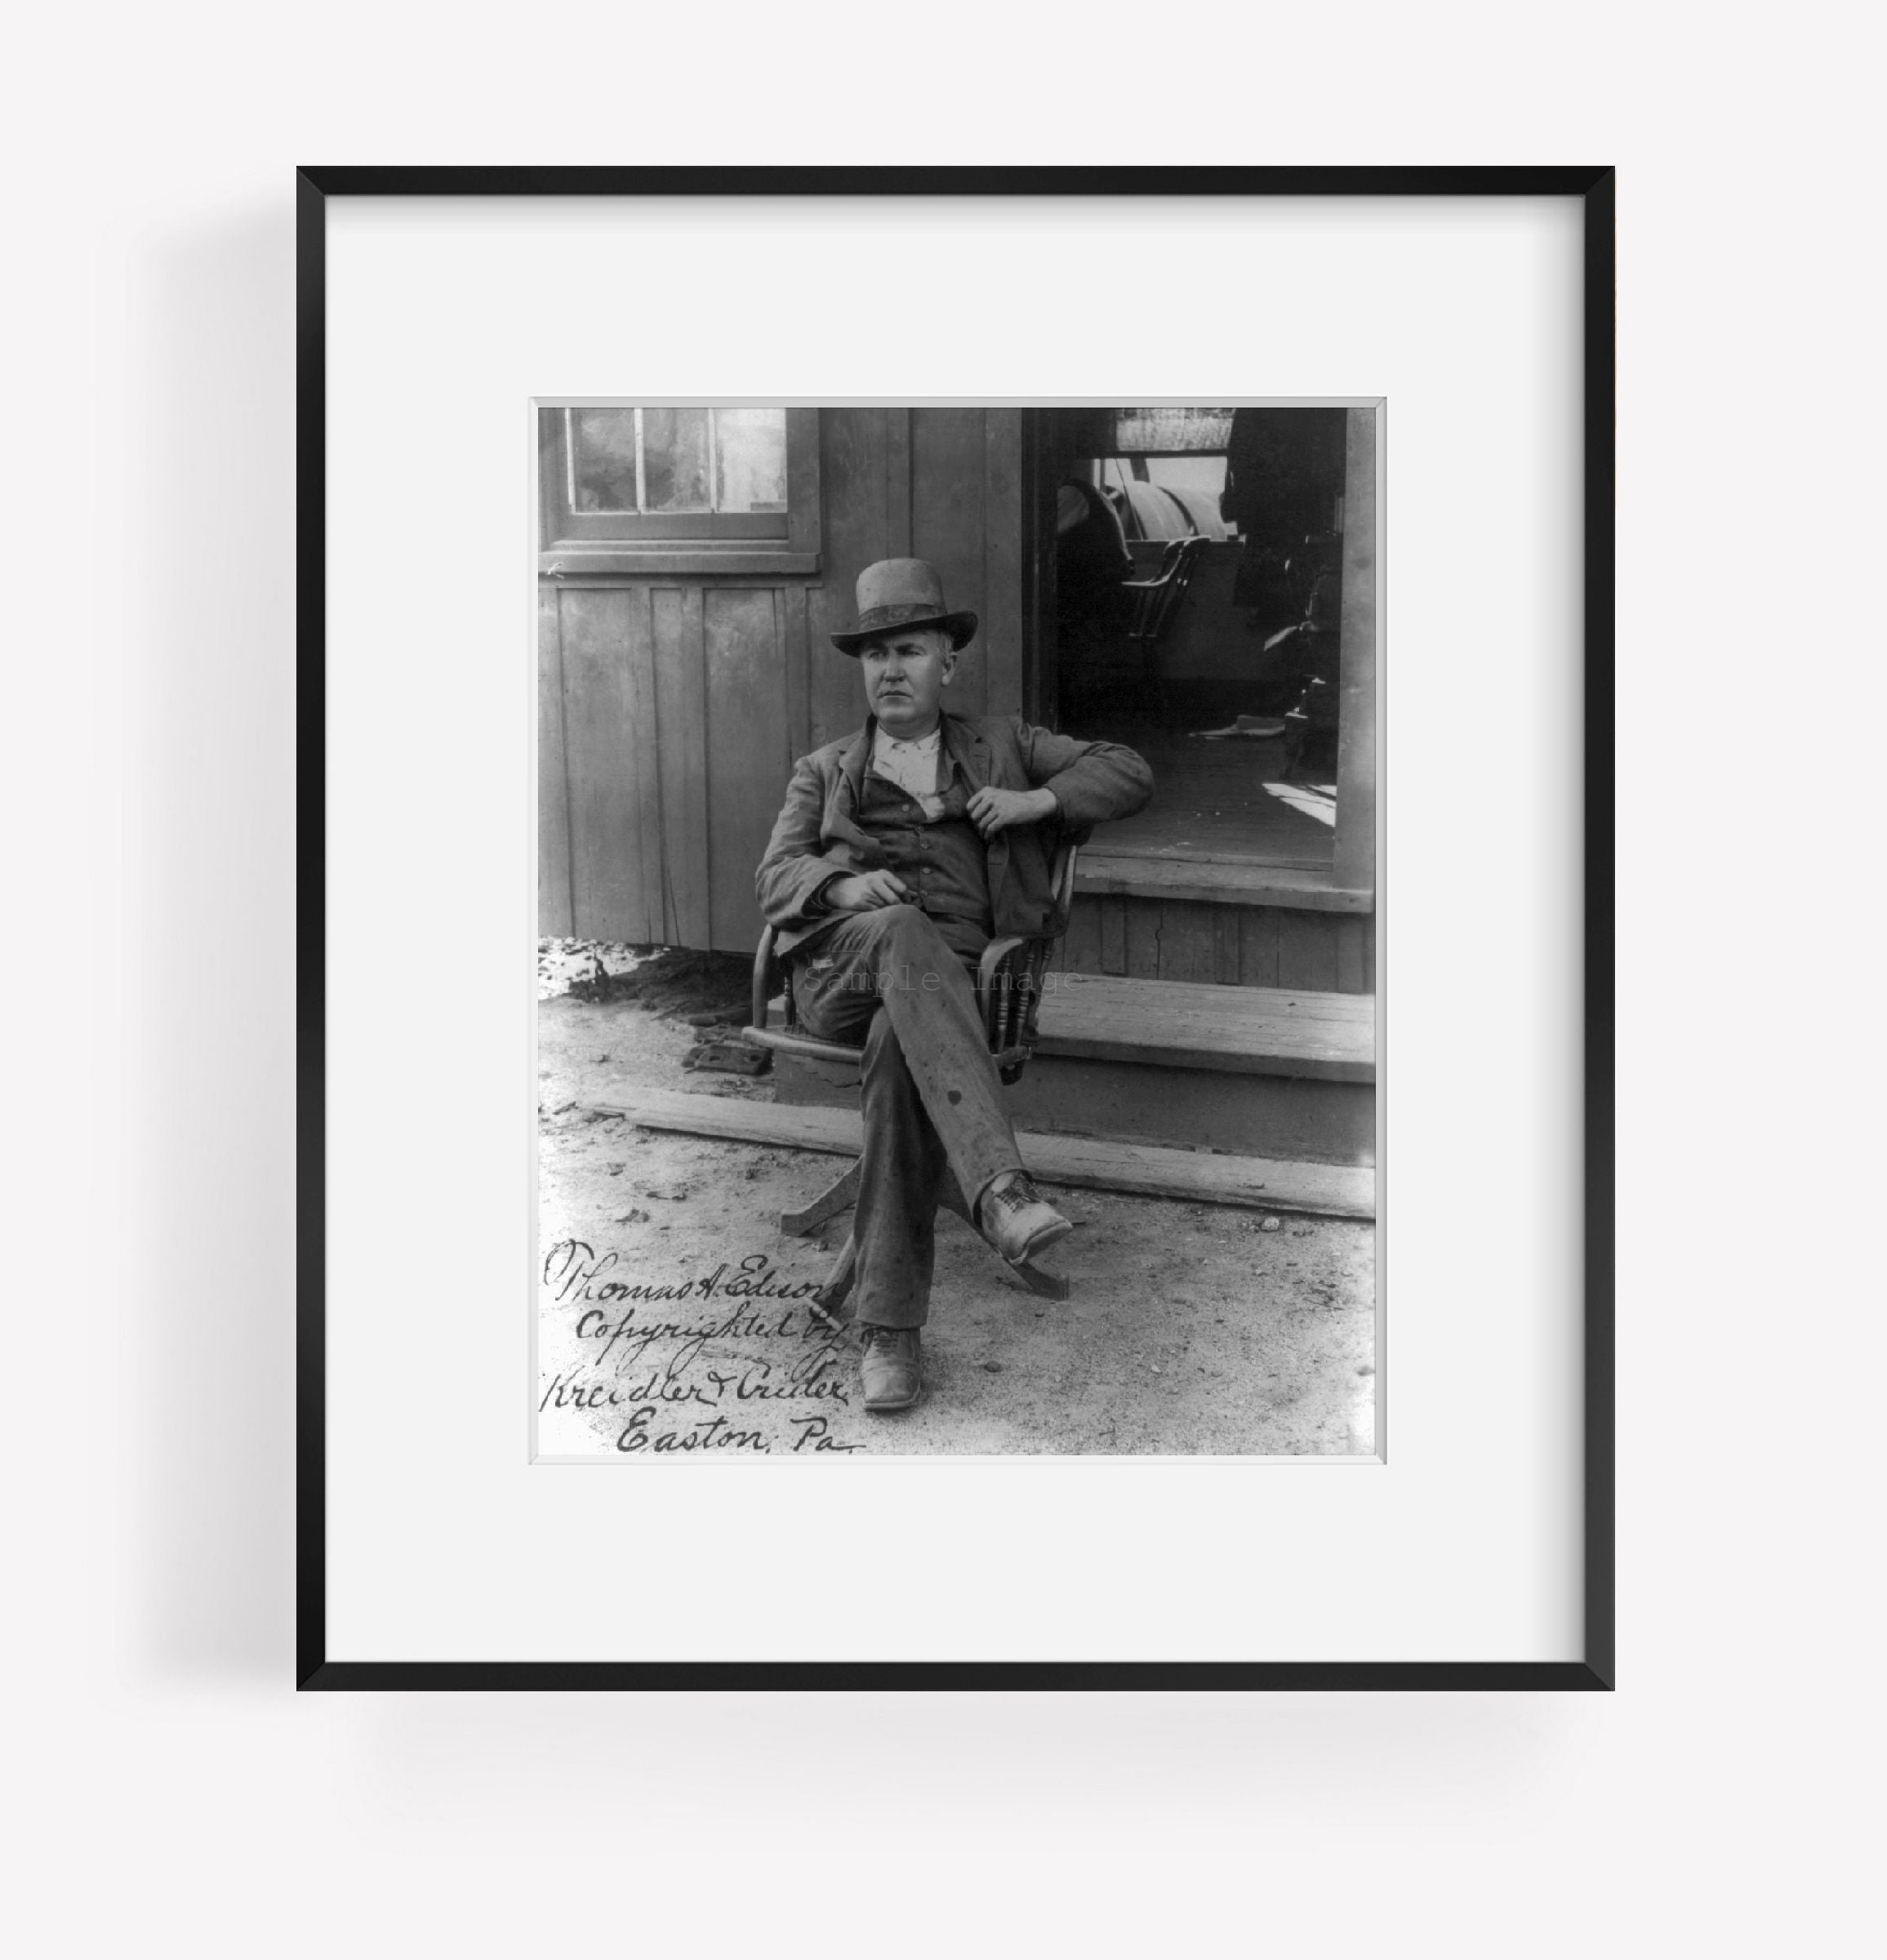 c1895 photograph of Thomas Alva Edison, 1847-1931, full-length portrait, seated